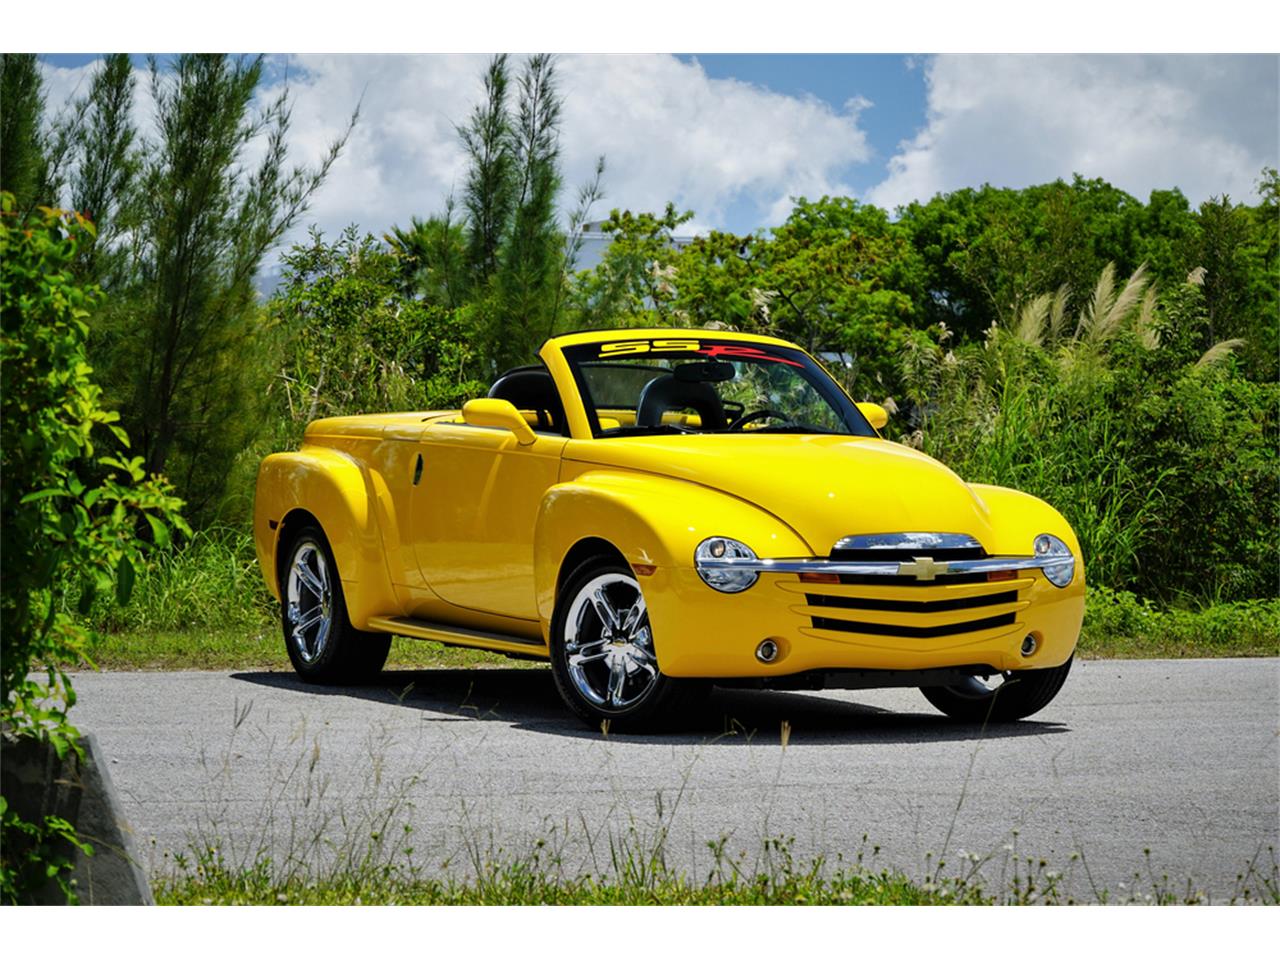 2006 Chevrolet SSR for Sale | ClassicCars.com | CC-1222115